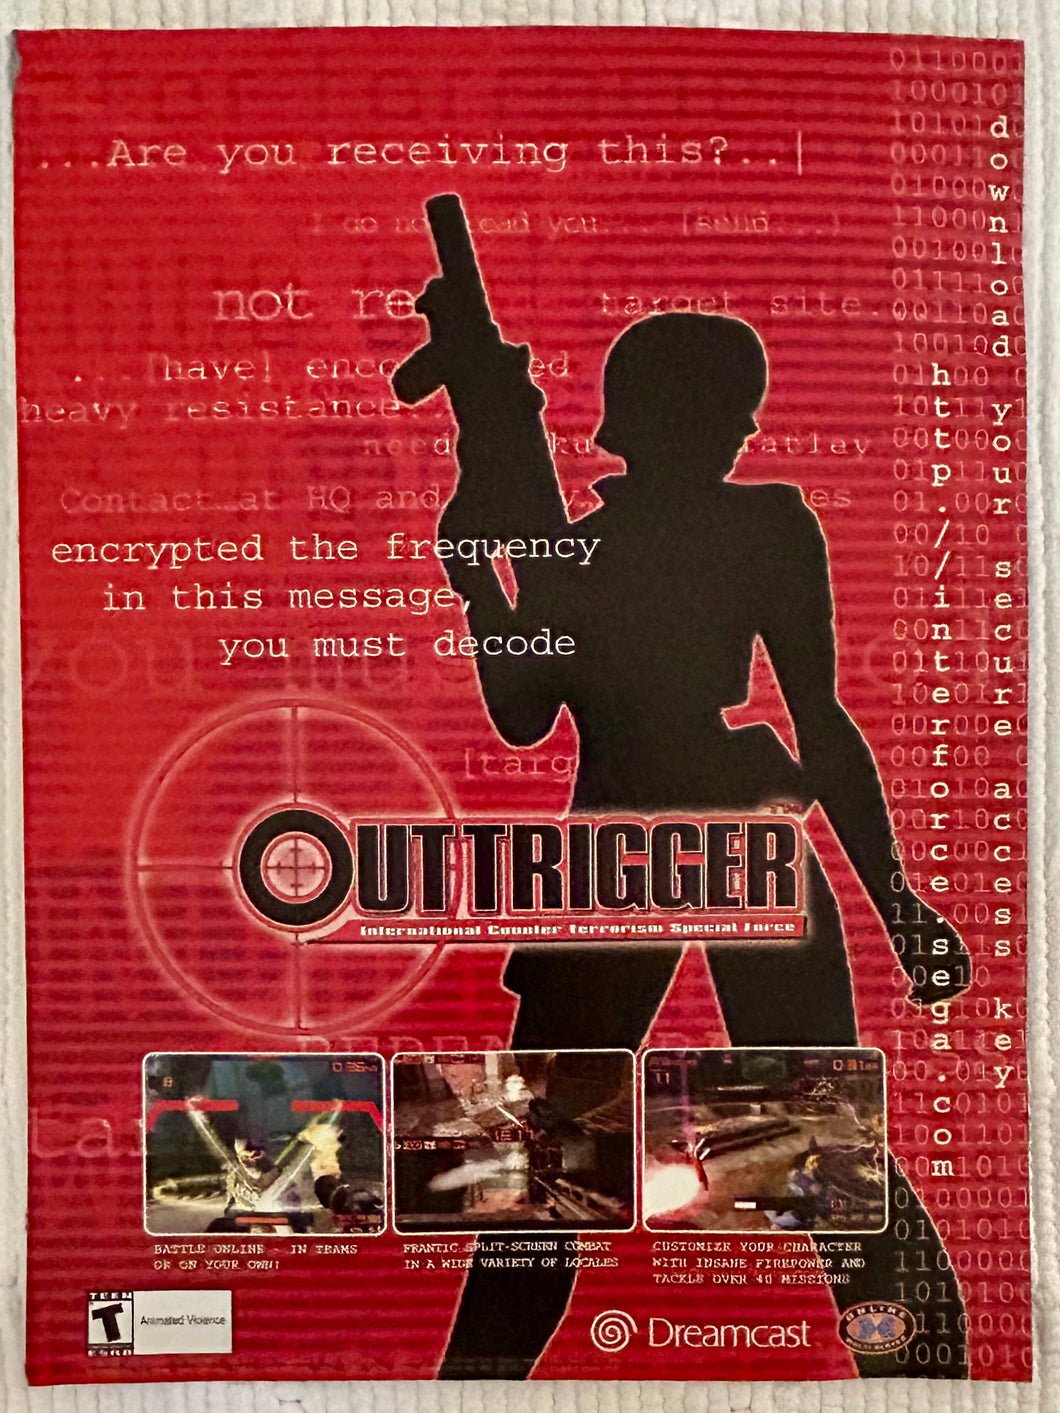 Outtrigger - Dreamcast - Original Vintage Advertisement - Print Ads - Laminated A4 Poster